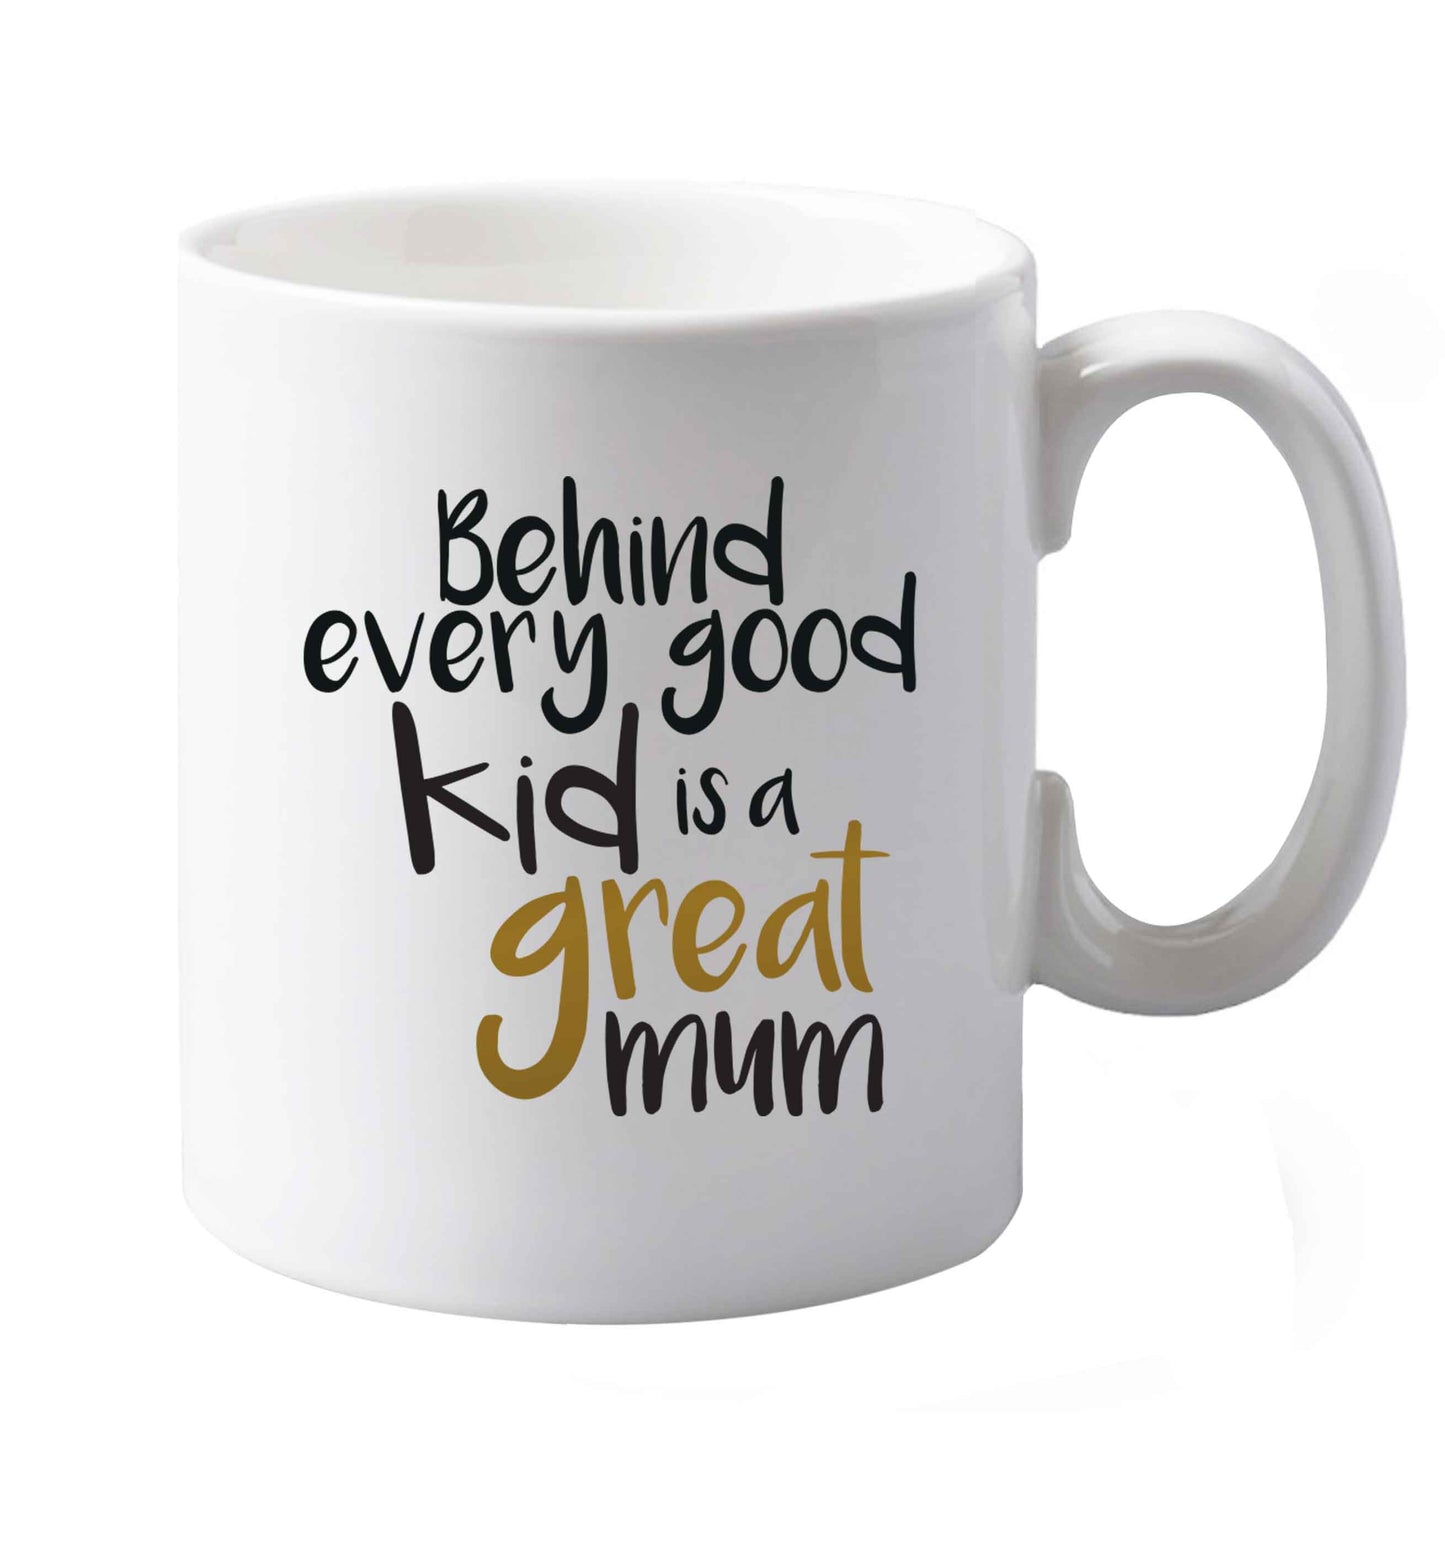 10 oz Behind every good kid is a great mum ceramic mug both sides